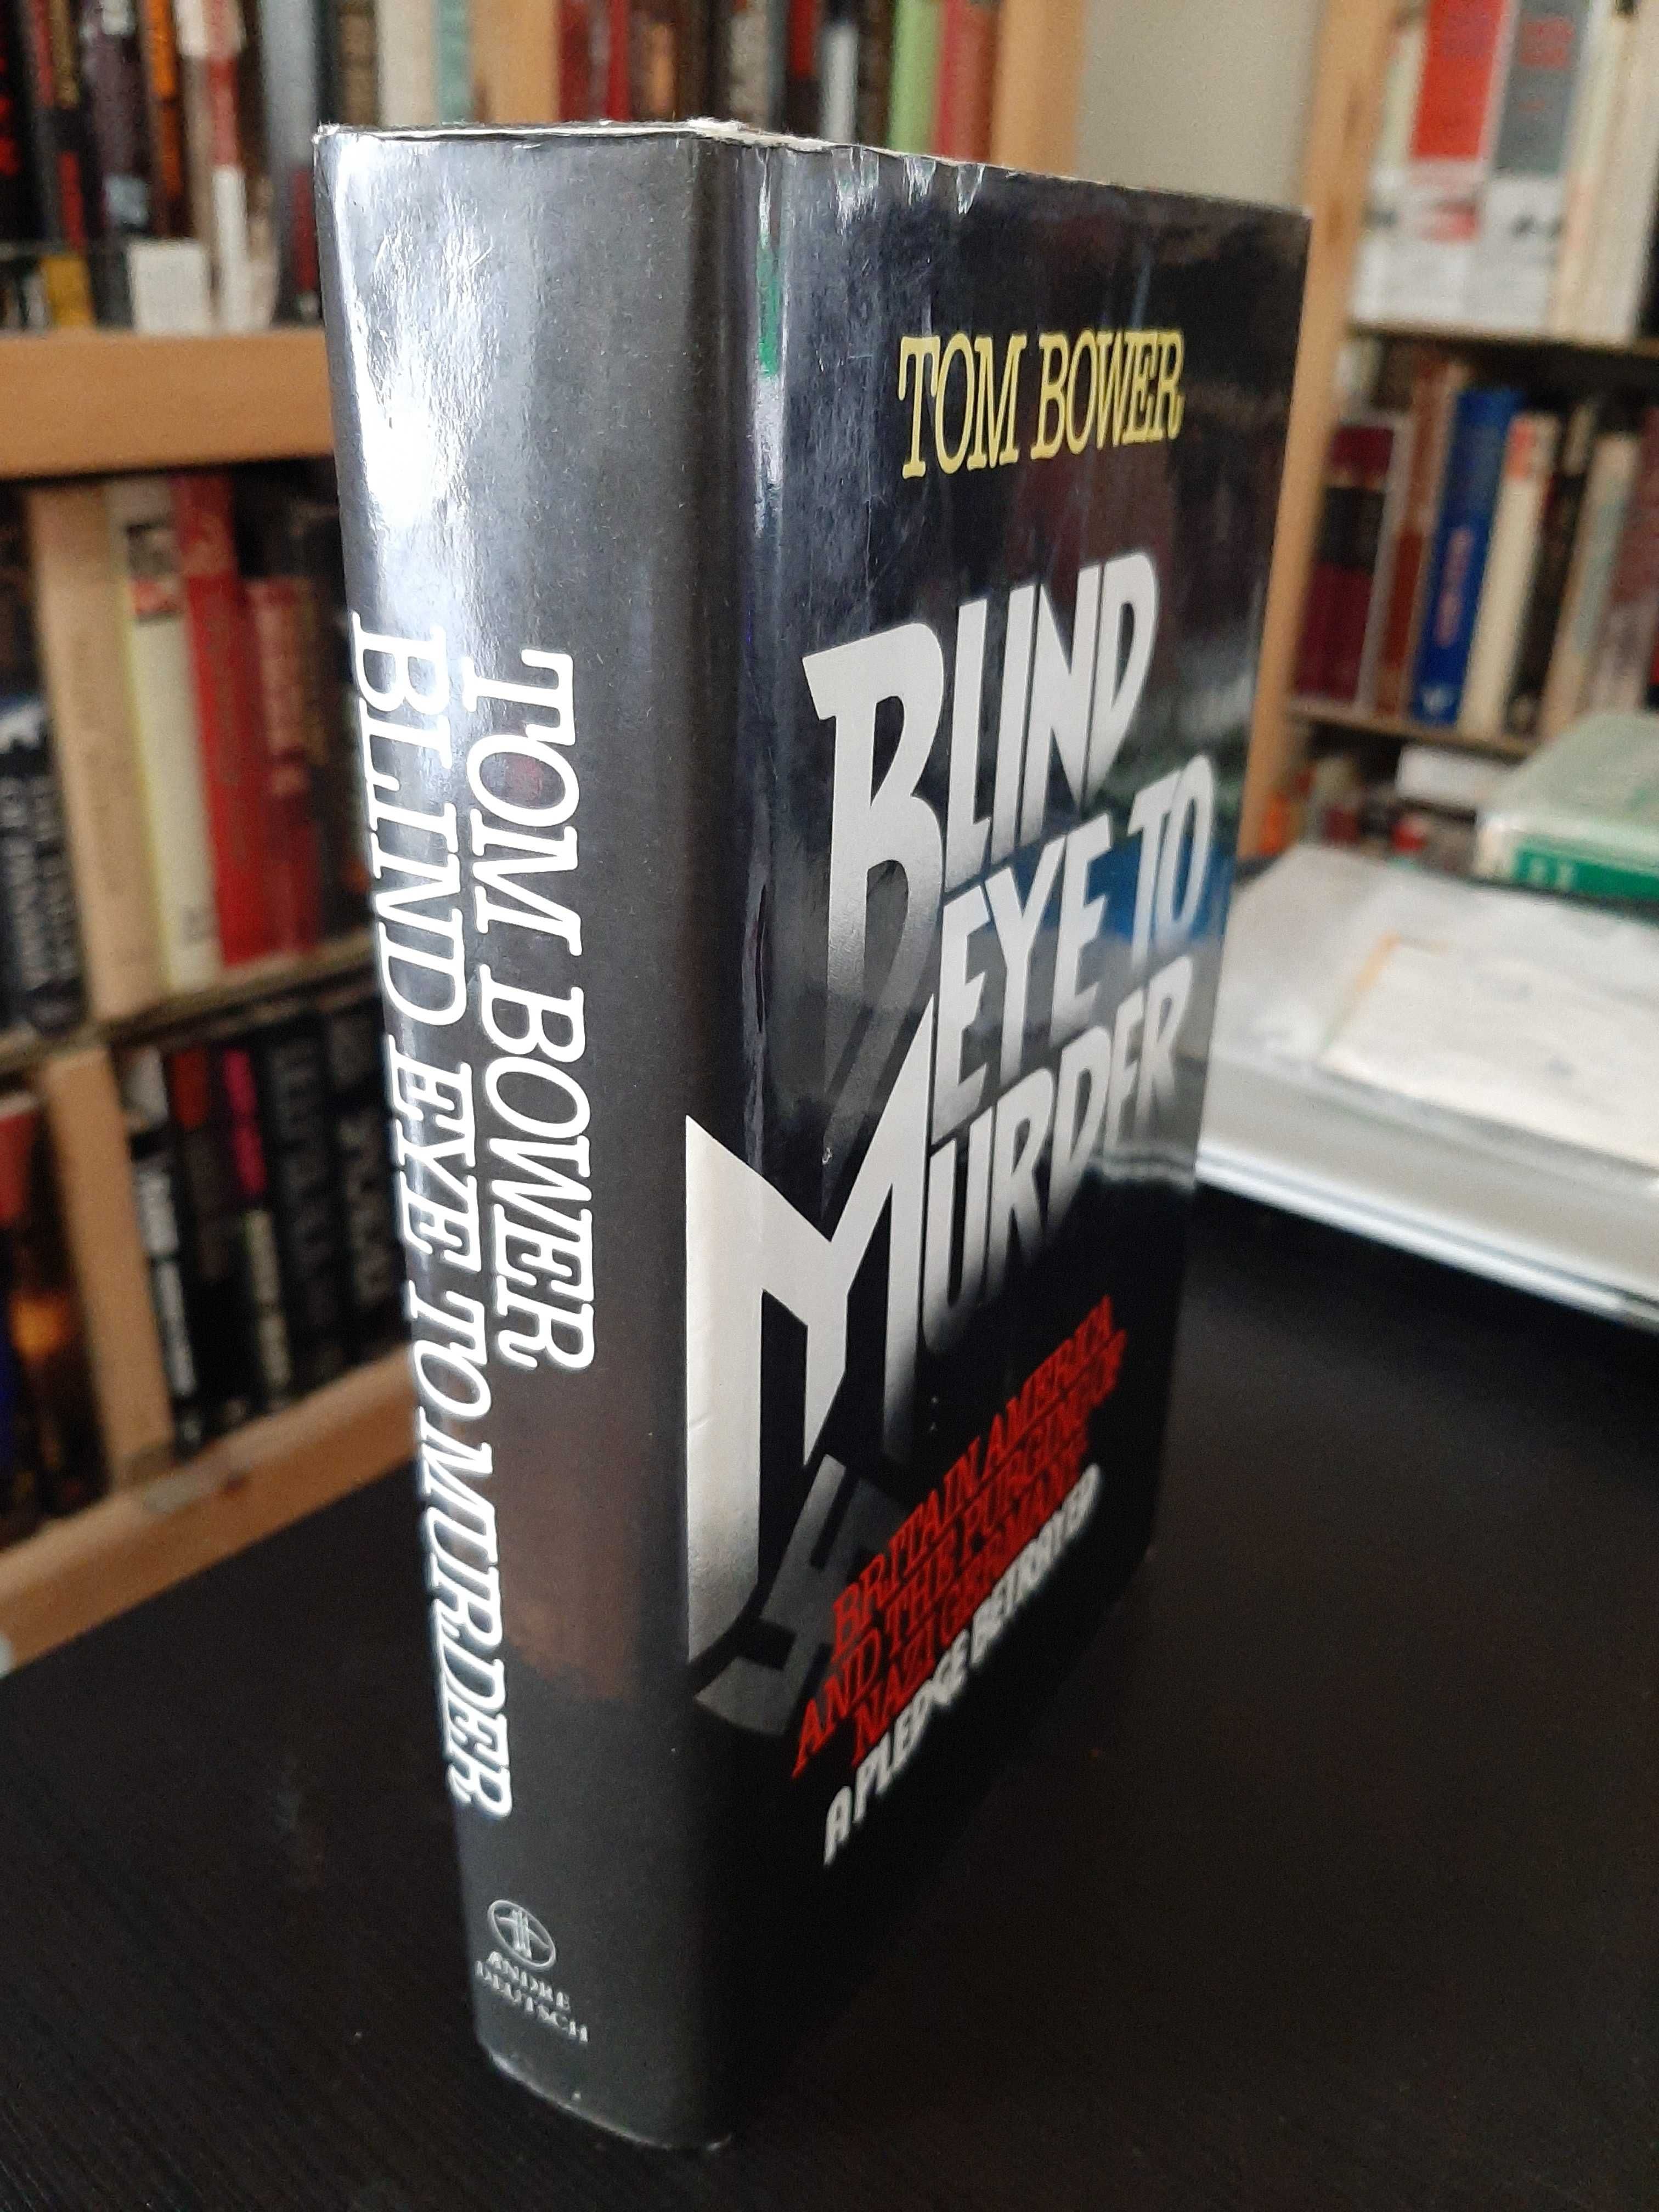 Tom Bower – Blind Eye to Murder: Purging of Nazi Germany